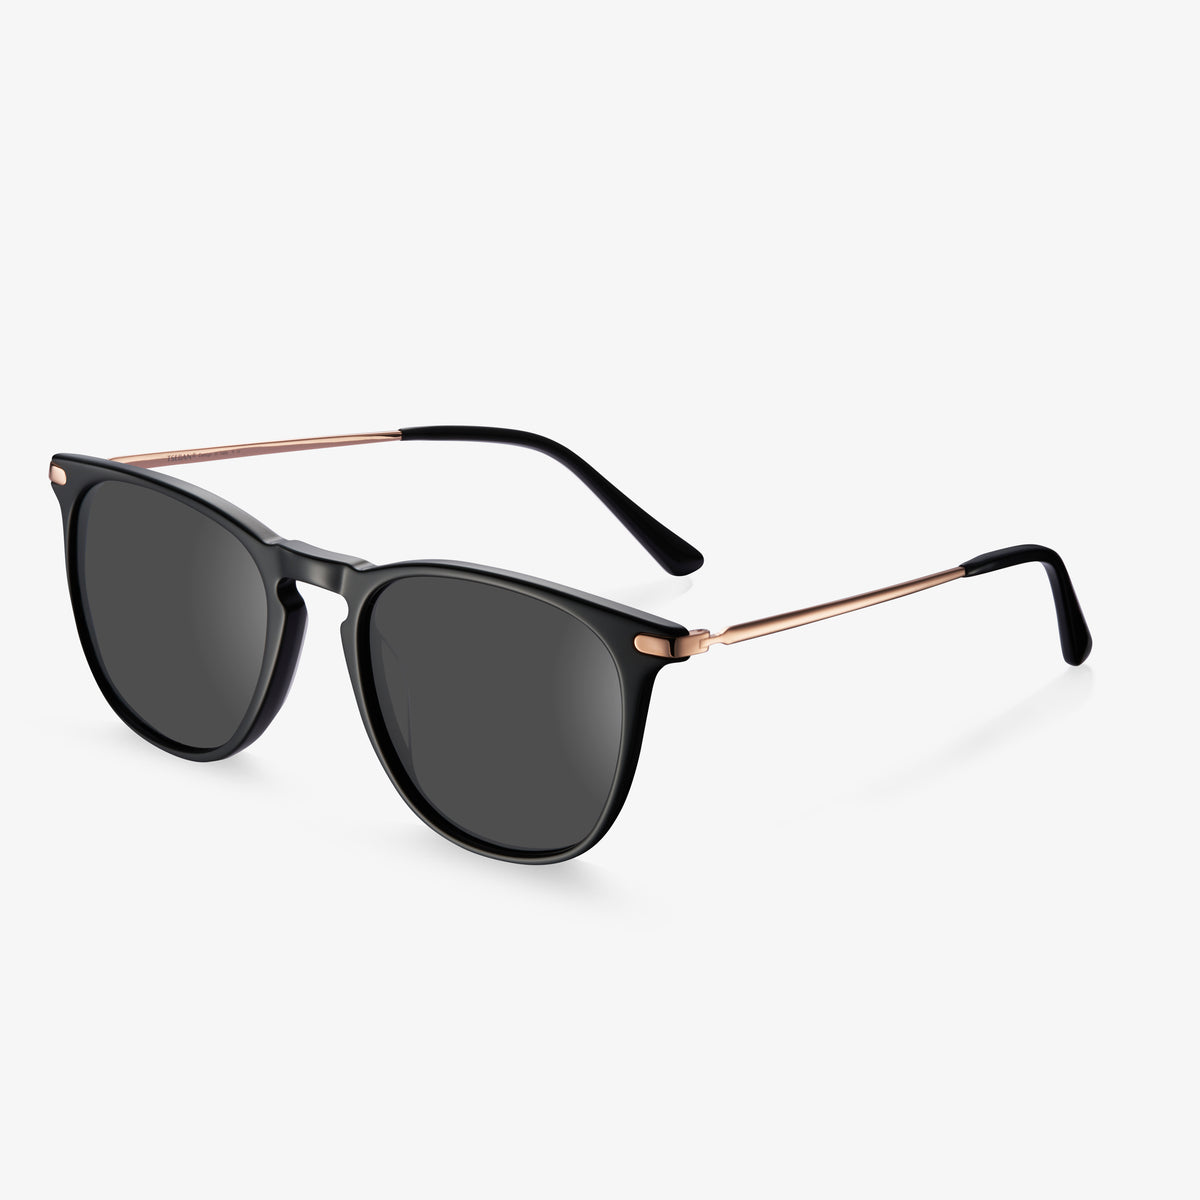 Black Round Acetate Frame Sunglasses  | KOALAEYE